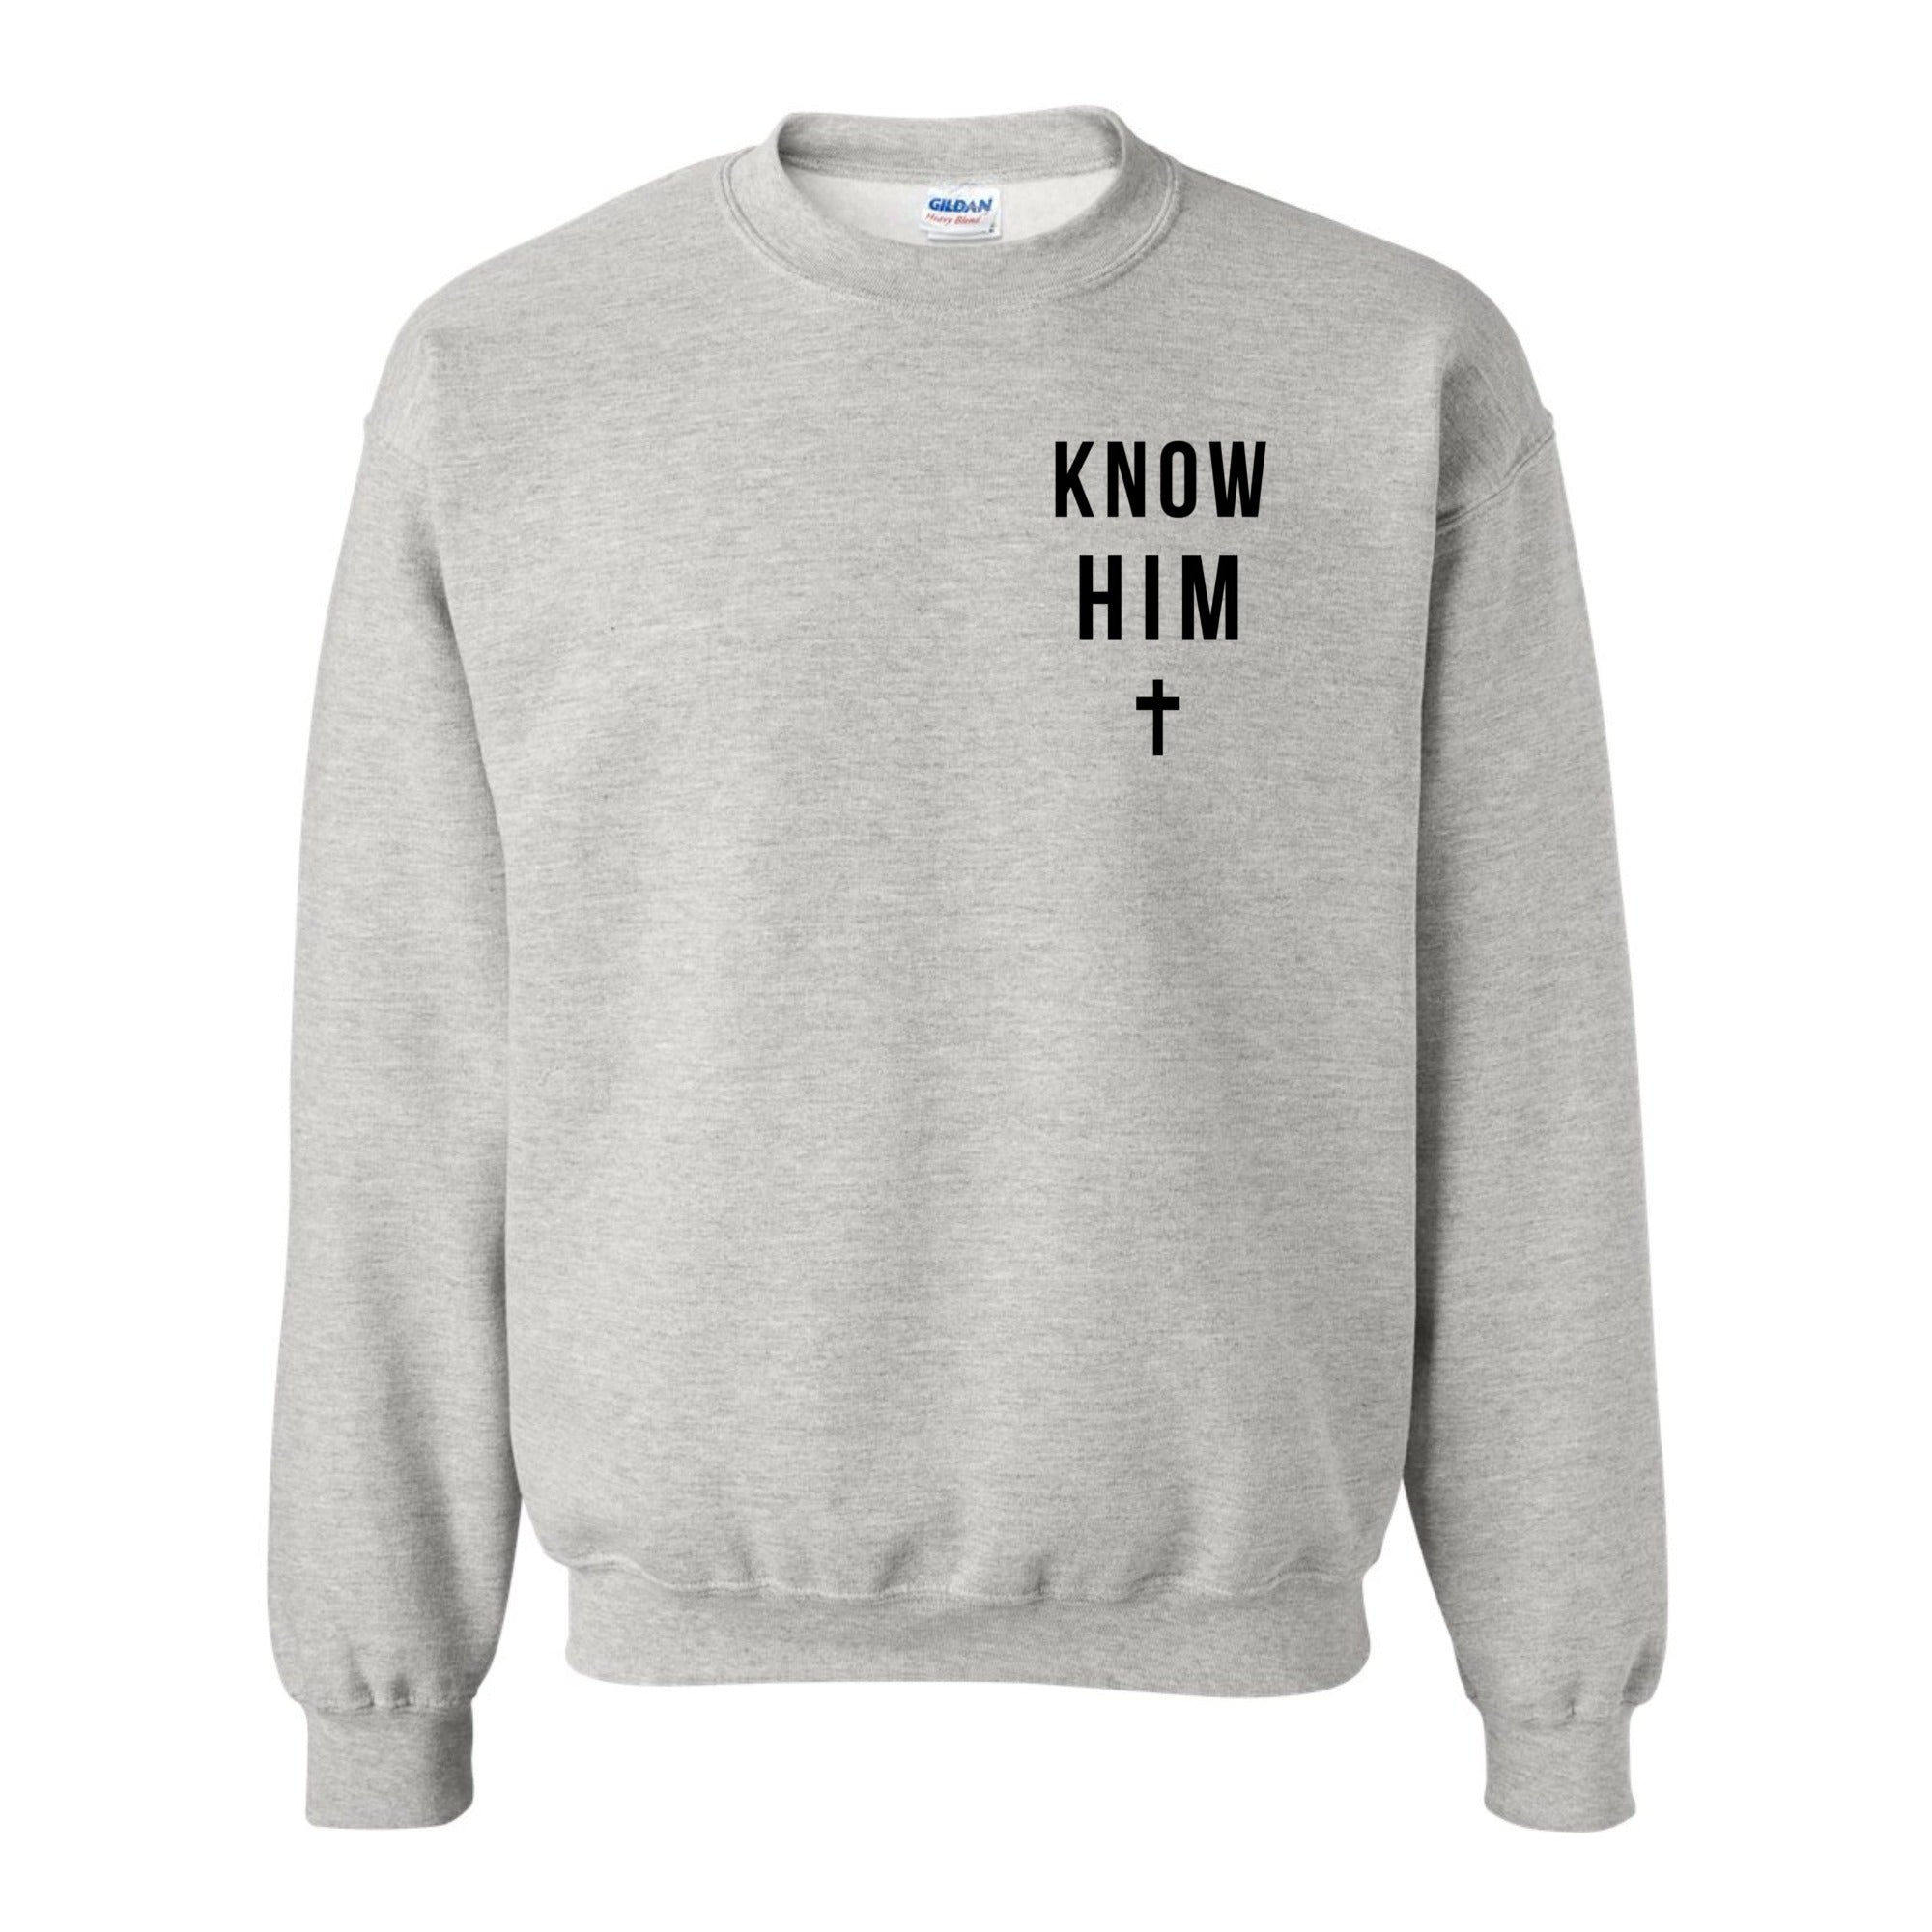 Know Him (Sports Grey) - Crewneck